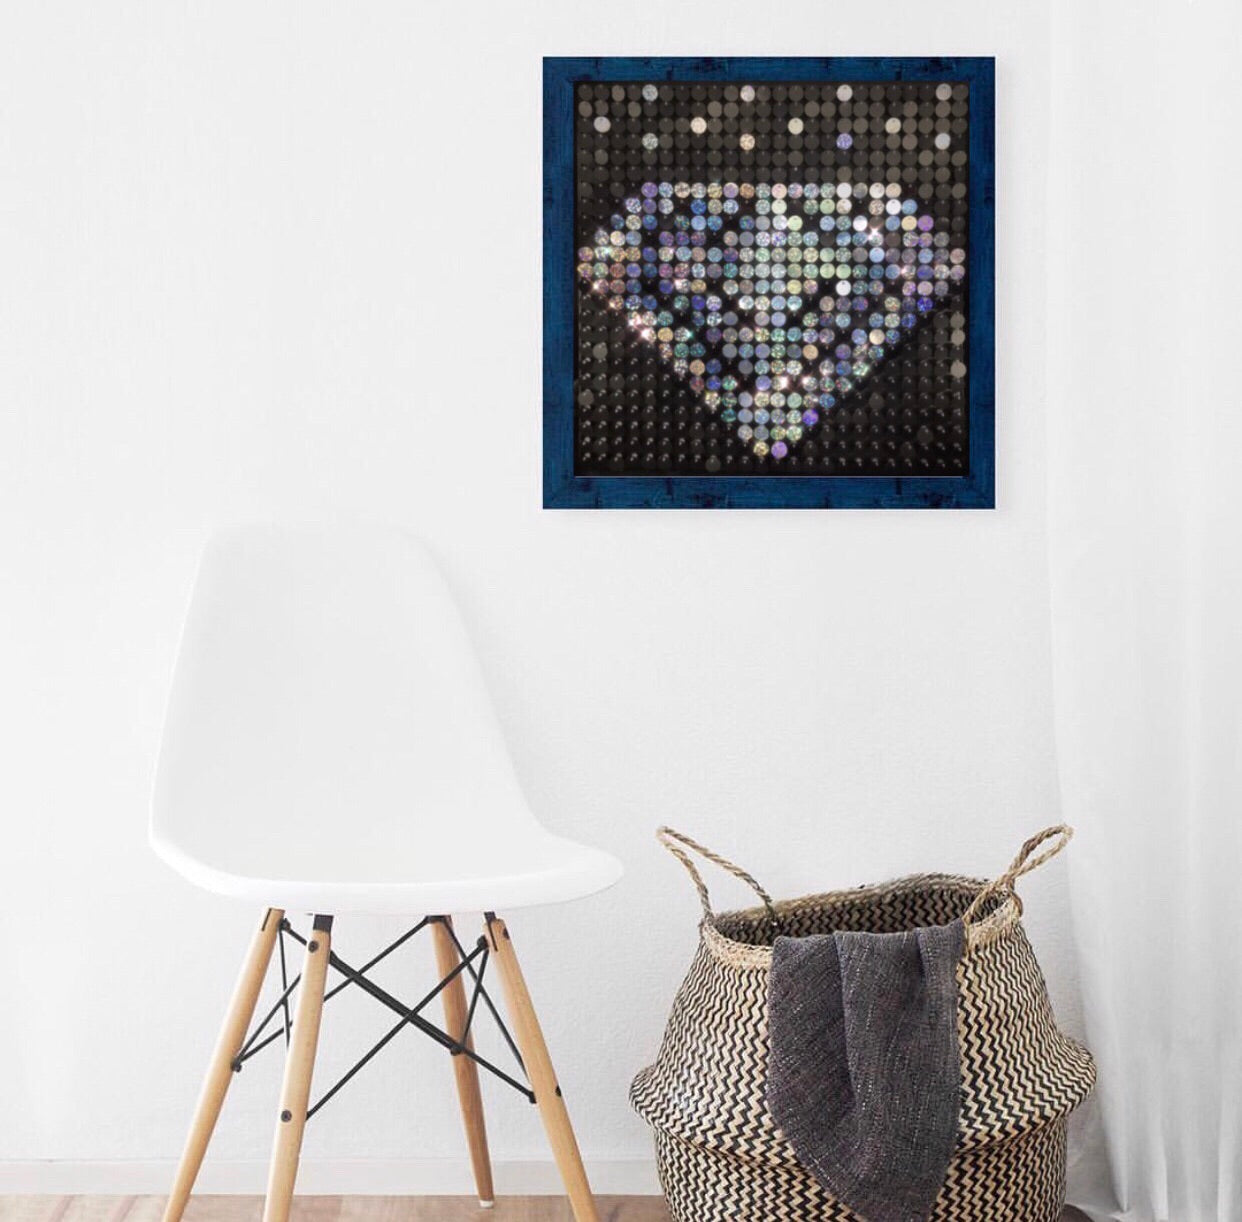 2018 Edition - Pixel Art Kit by Pix Perfect